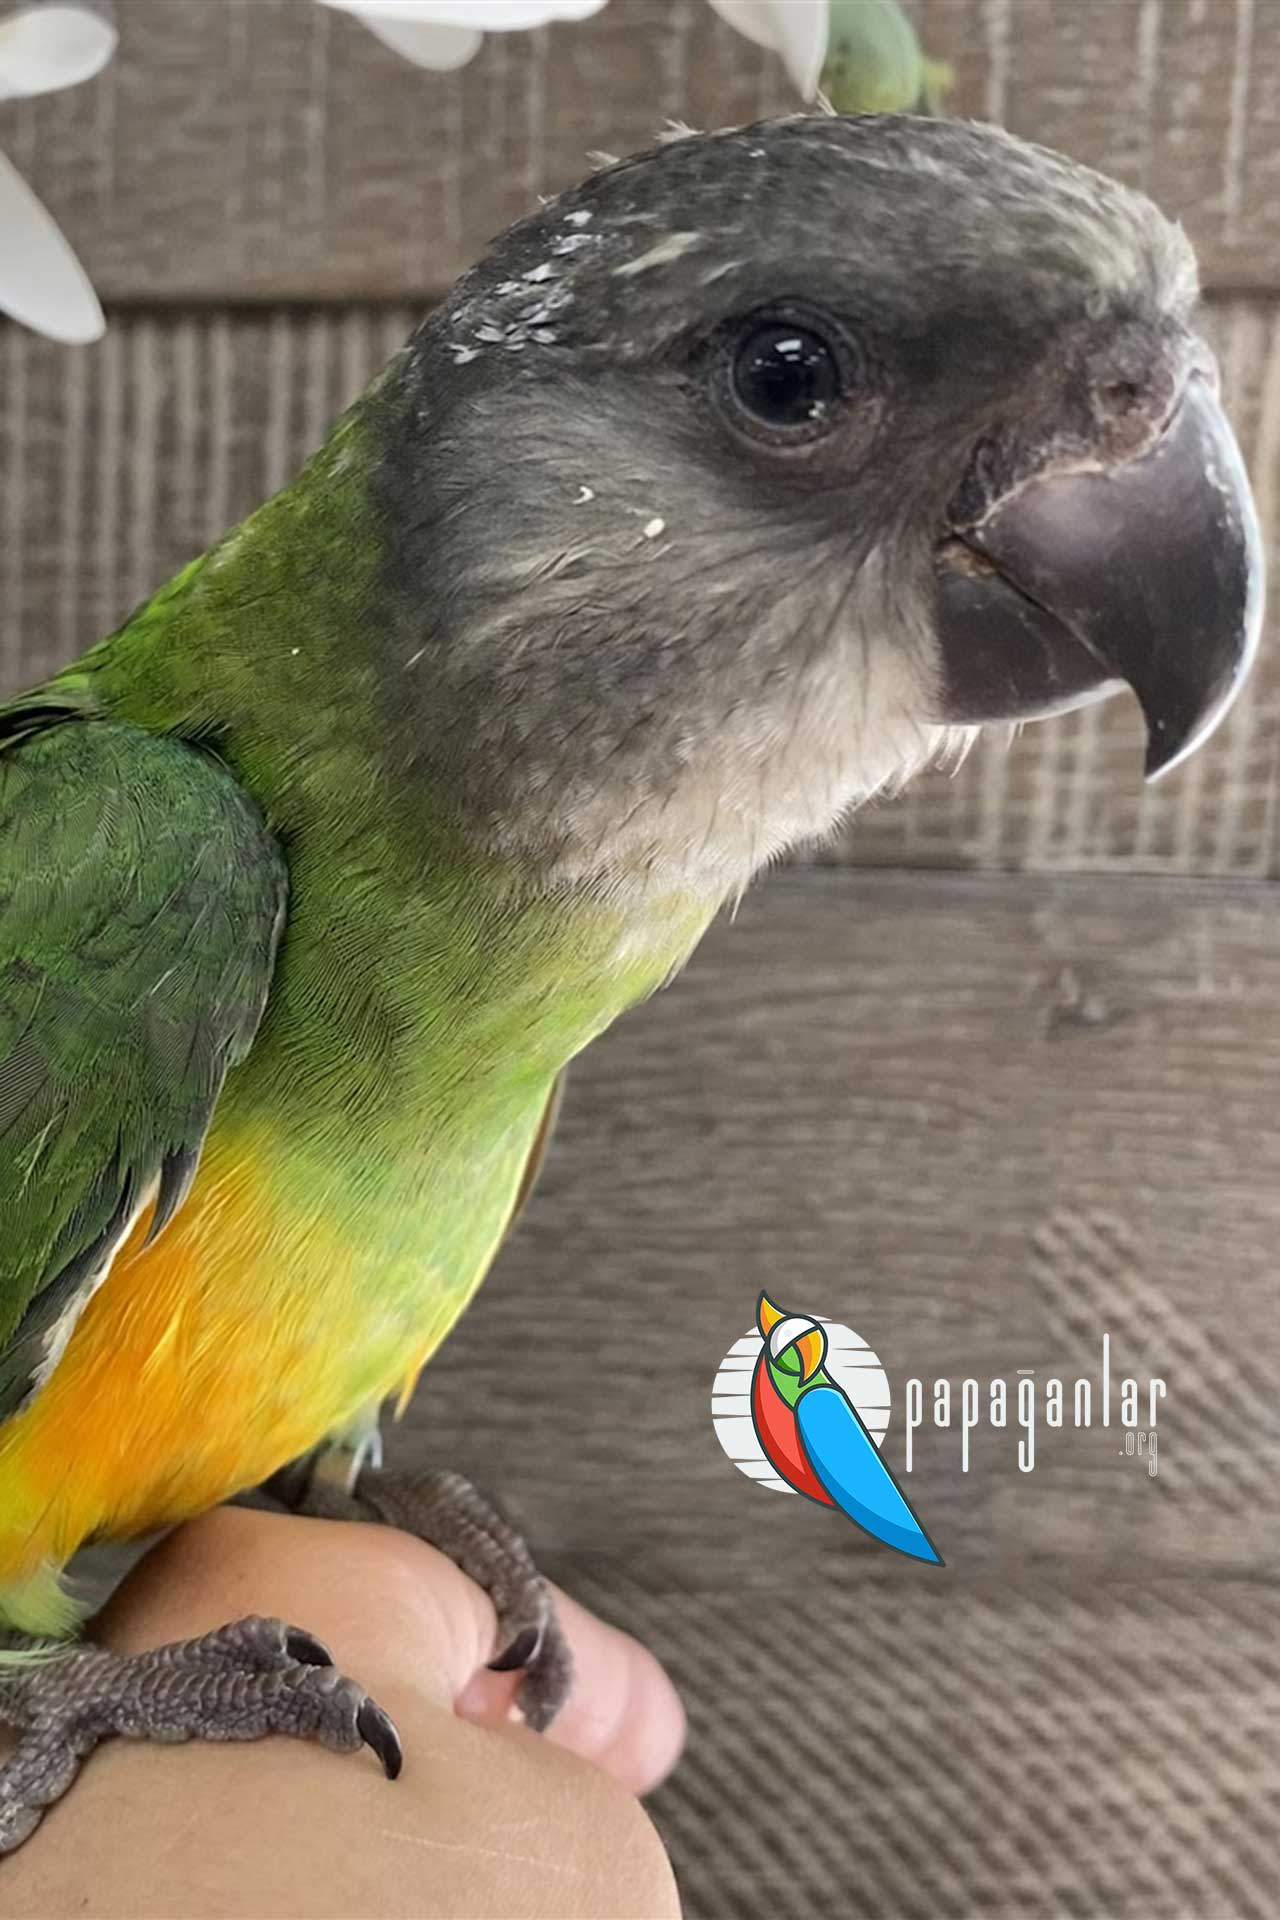 senegal parrot price 2021